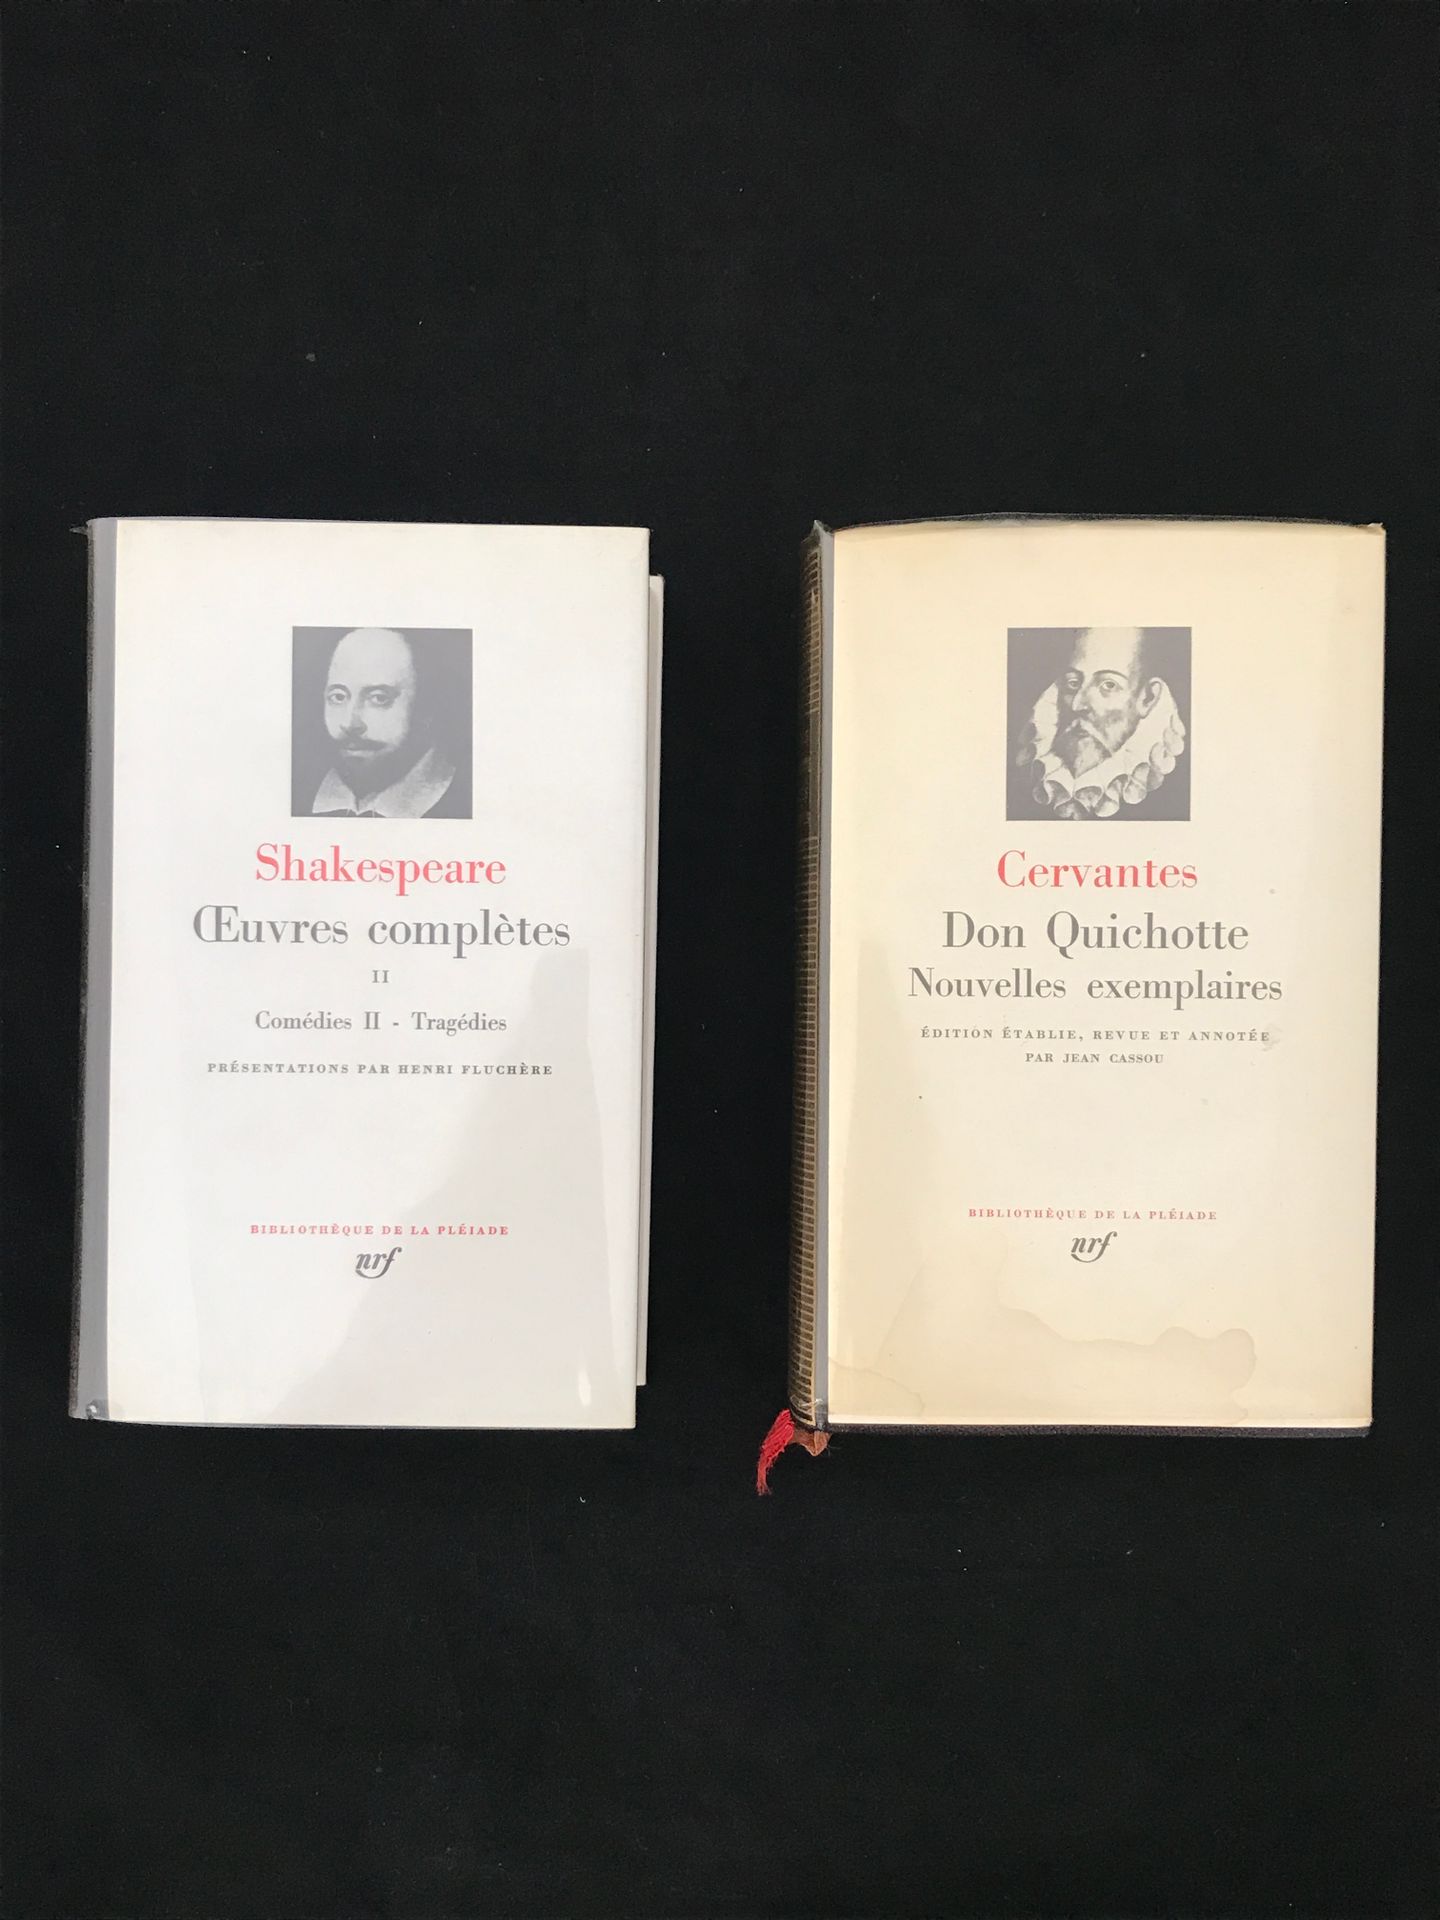 Null La Pléiade》，一套两册，包括。

- 莎士比亚，"作品集"，第二卷

CERVANTES "堂吉诃德，新版"。